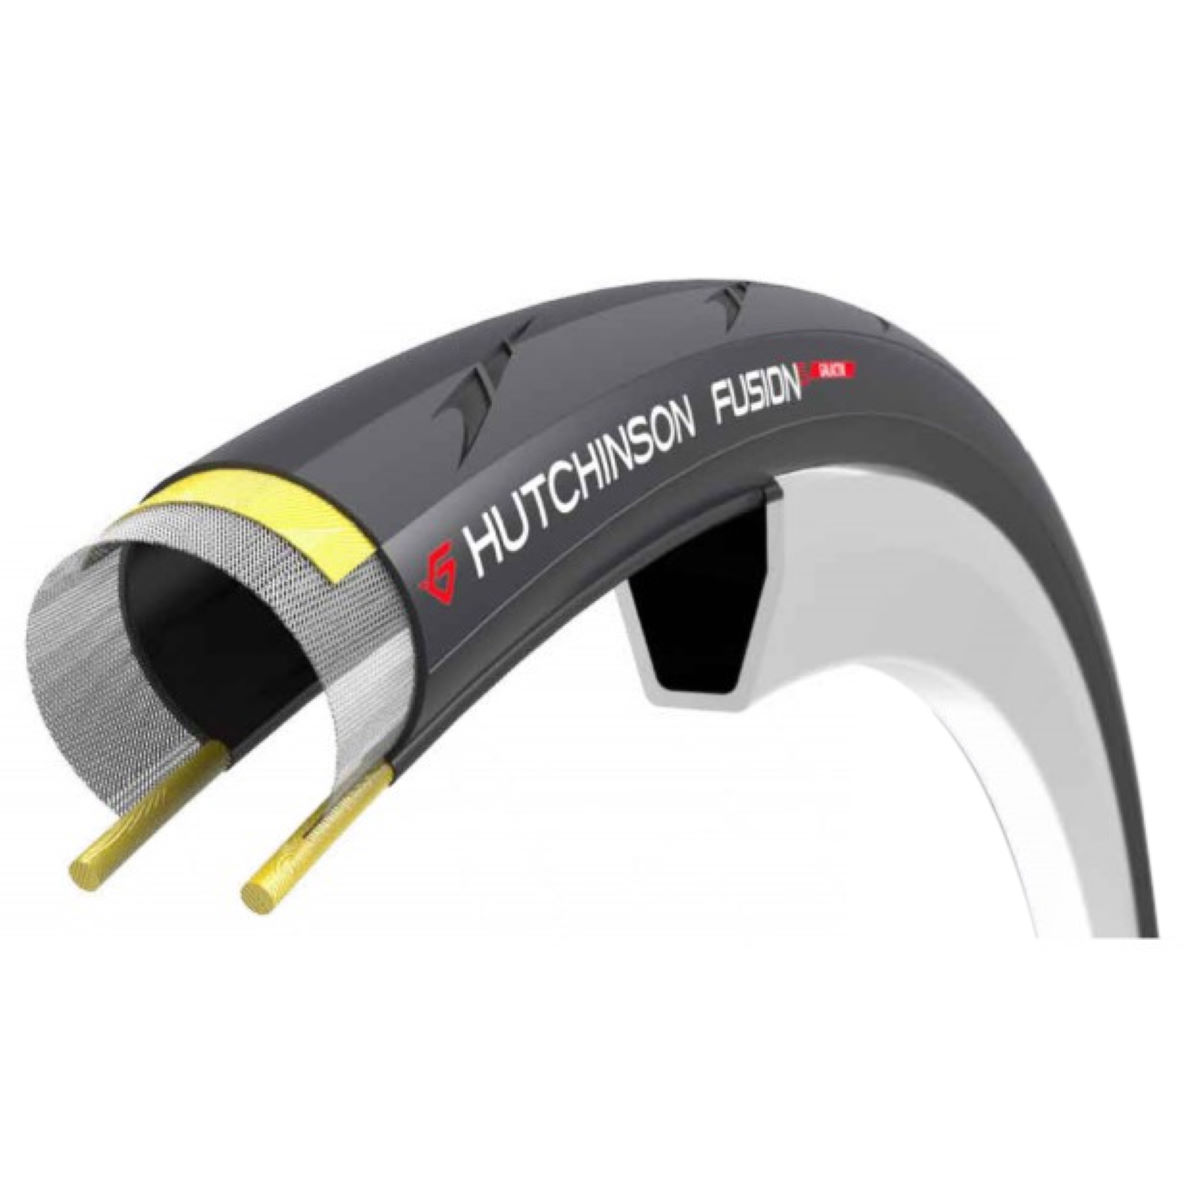 Cubierta Hutchinson Fusion 5 Kevlar Pro Tech plegable de carretera - Cubiertas